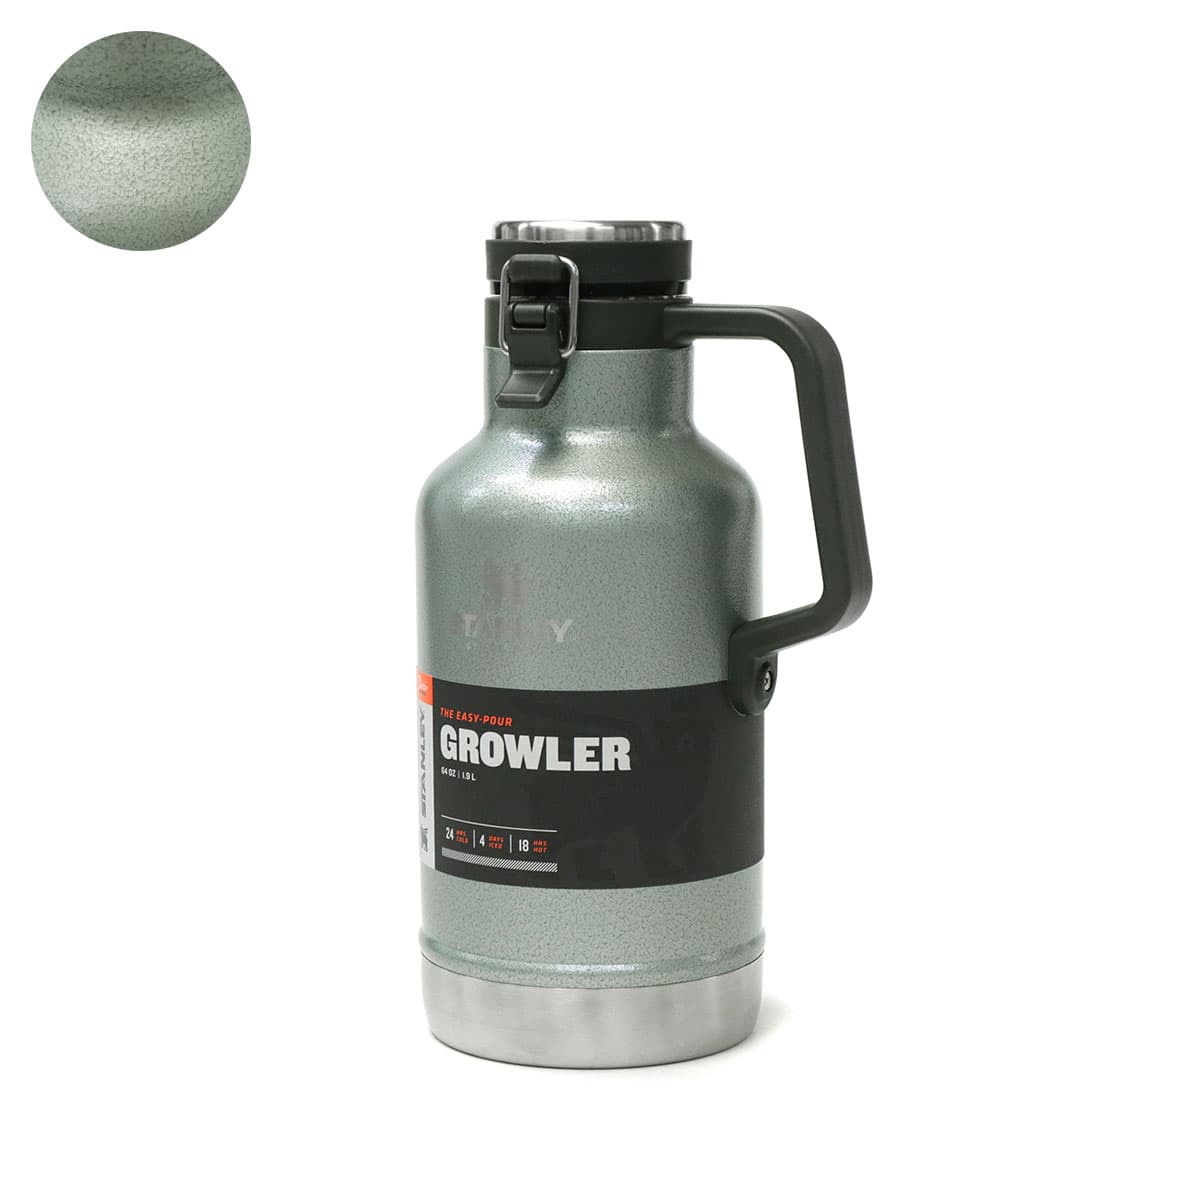 STANLEY グロウラー 1.9L 真空ボトル 水筒